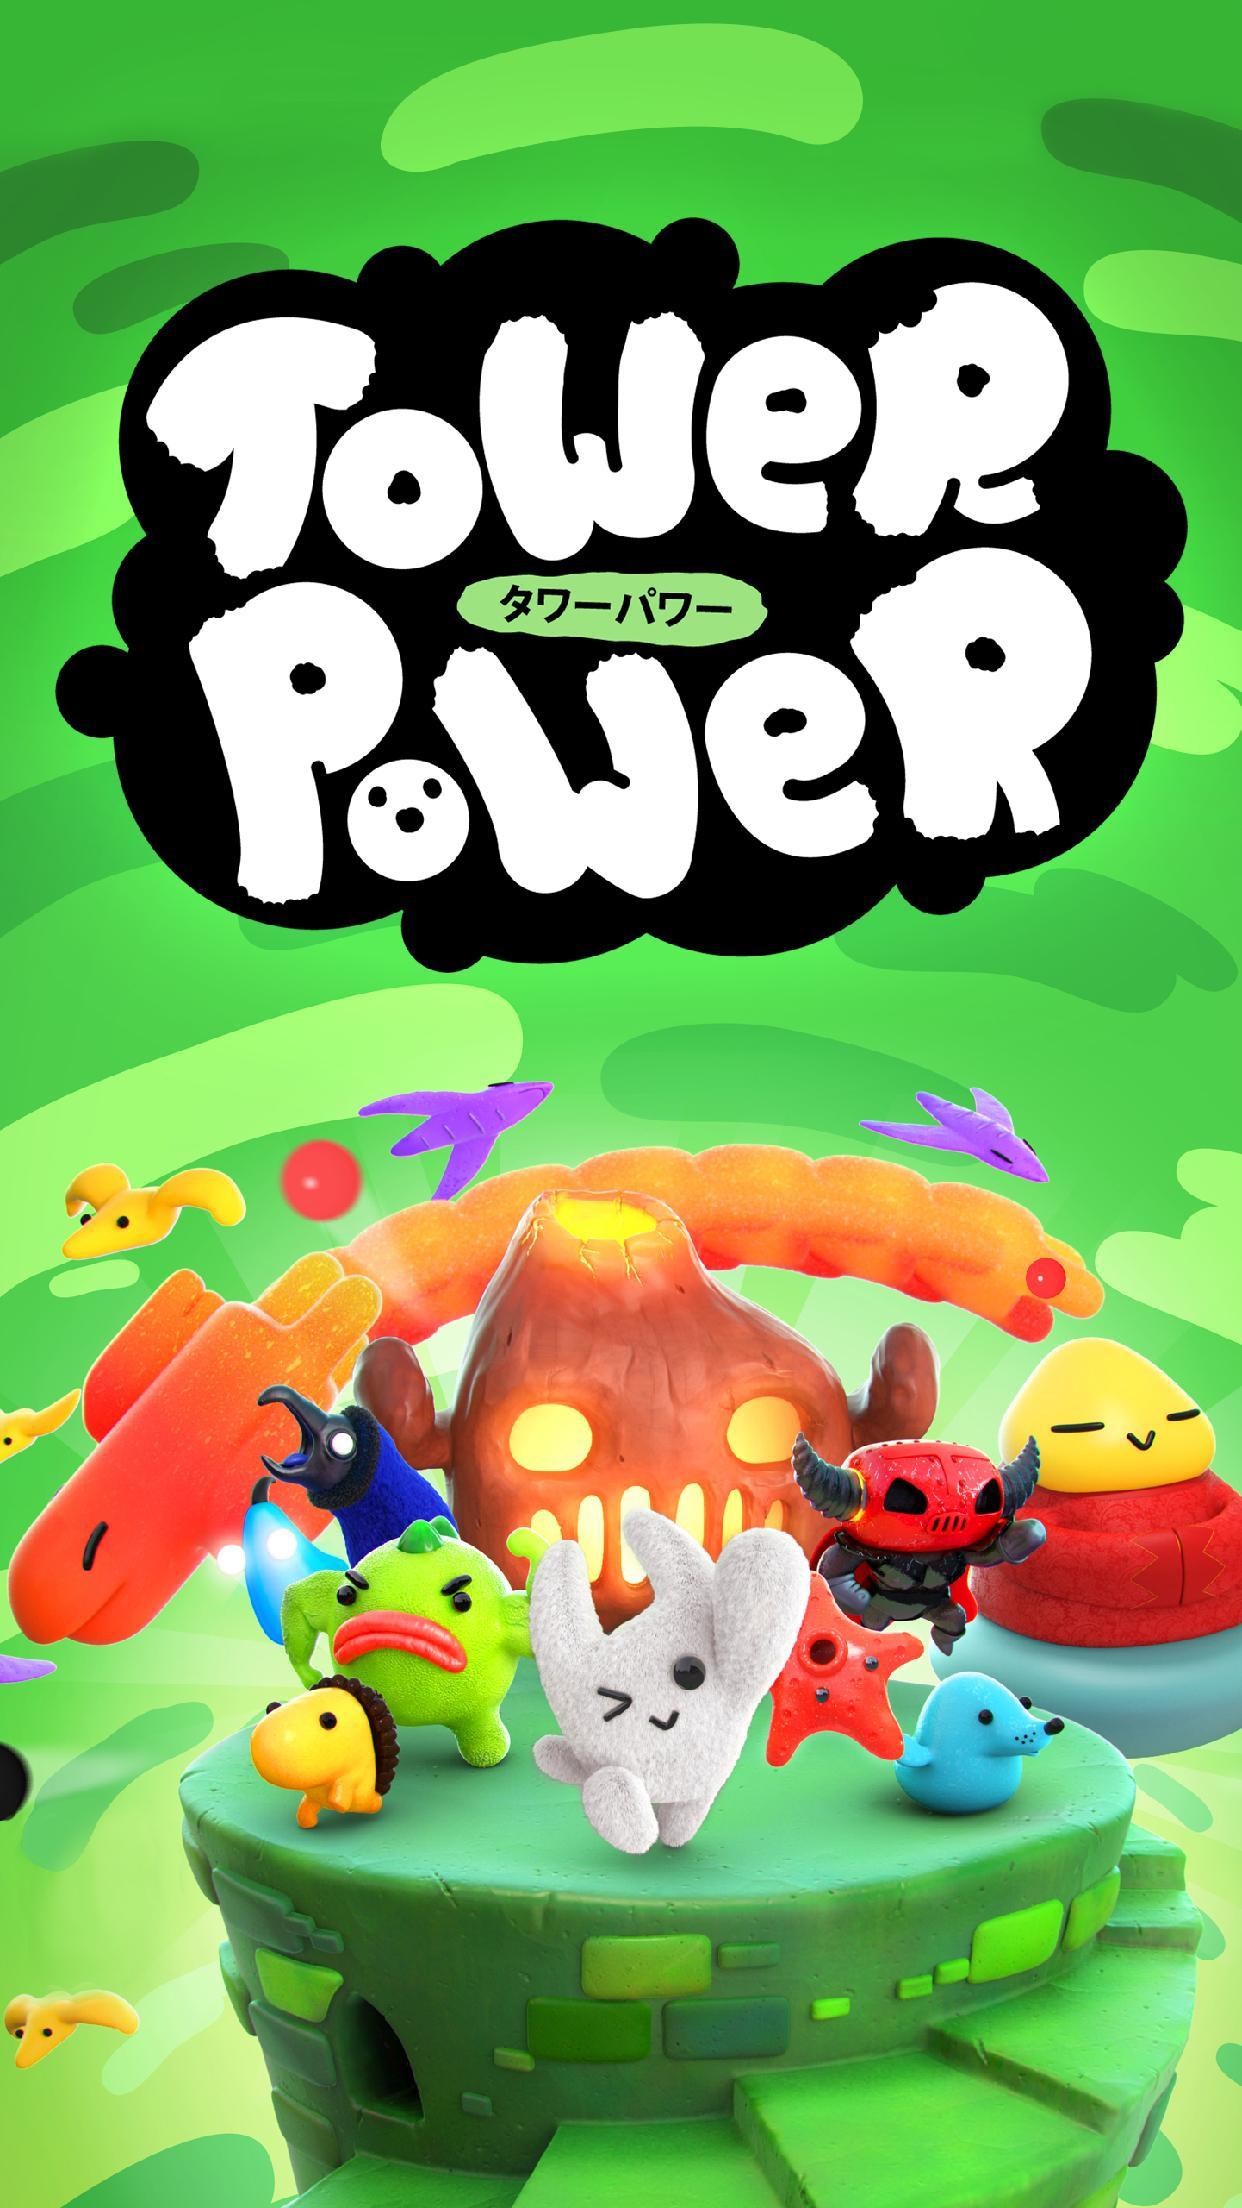 Screenshot 1 of Tower Power(Unreleased) 1.0.0